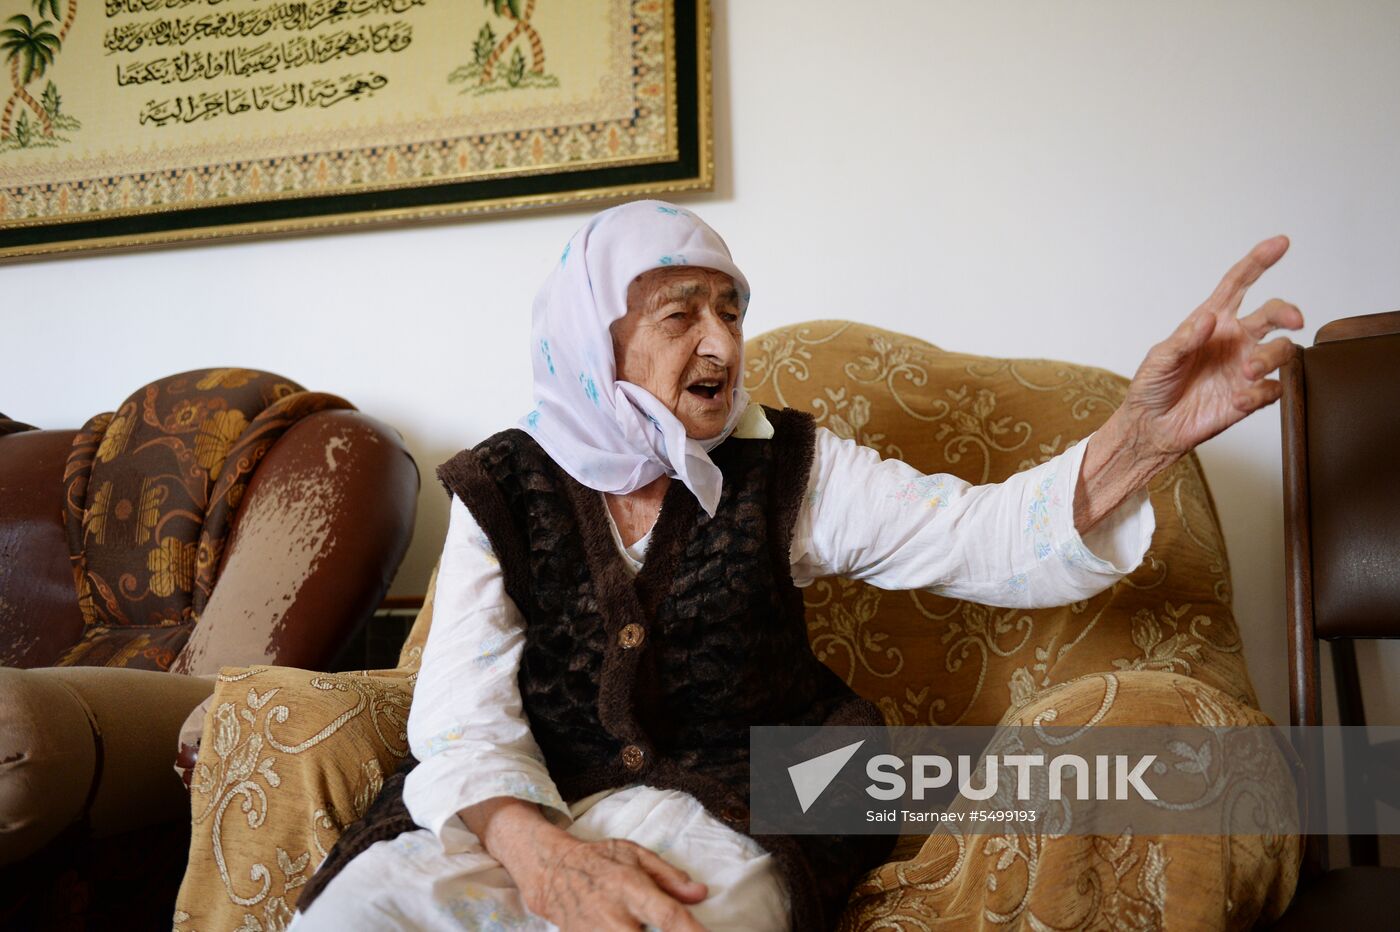 Koku Istambulova, 128-year-old woman from Chechnya